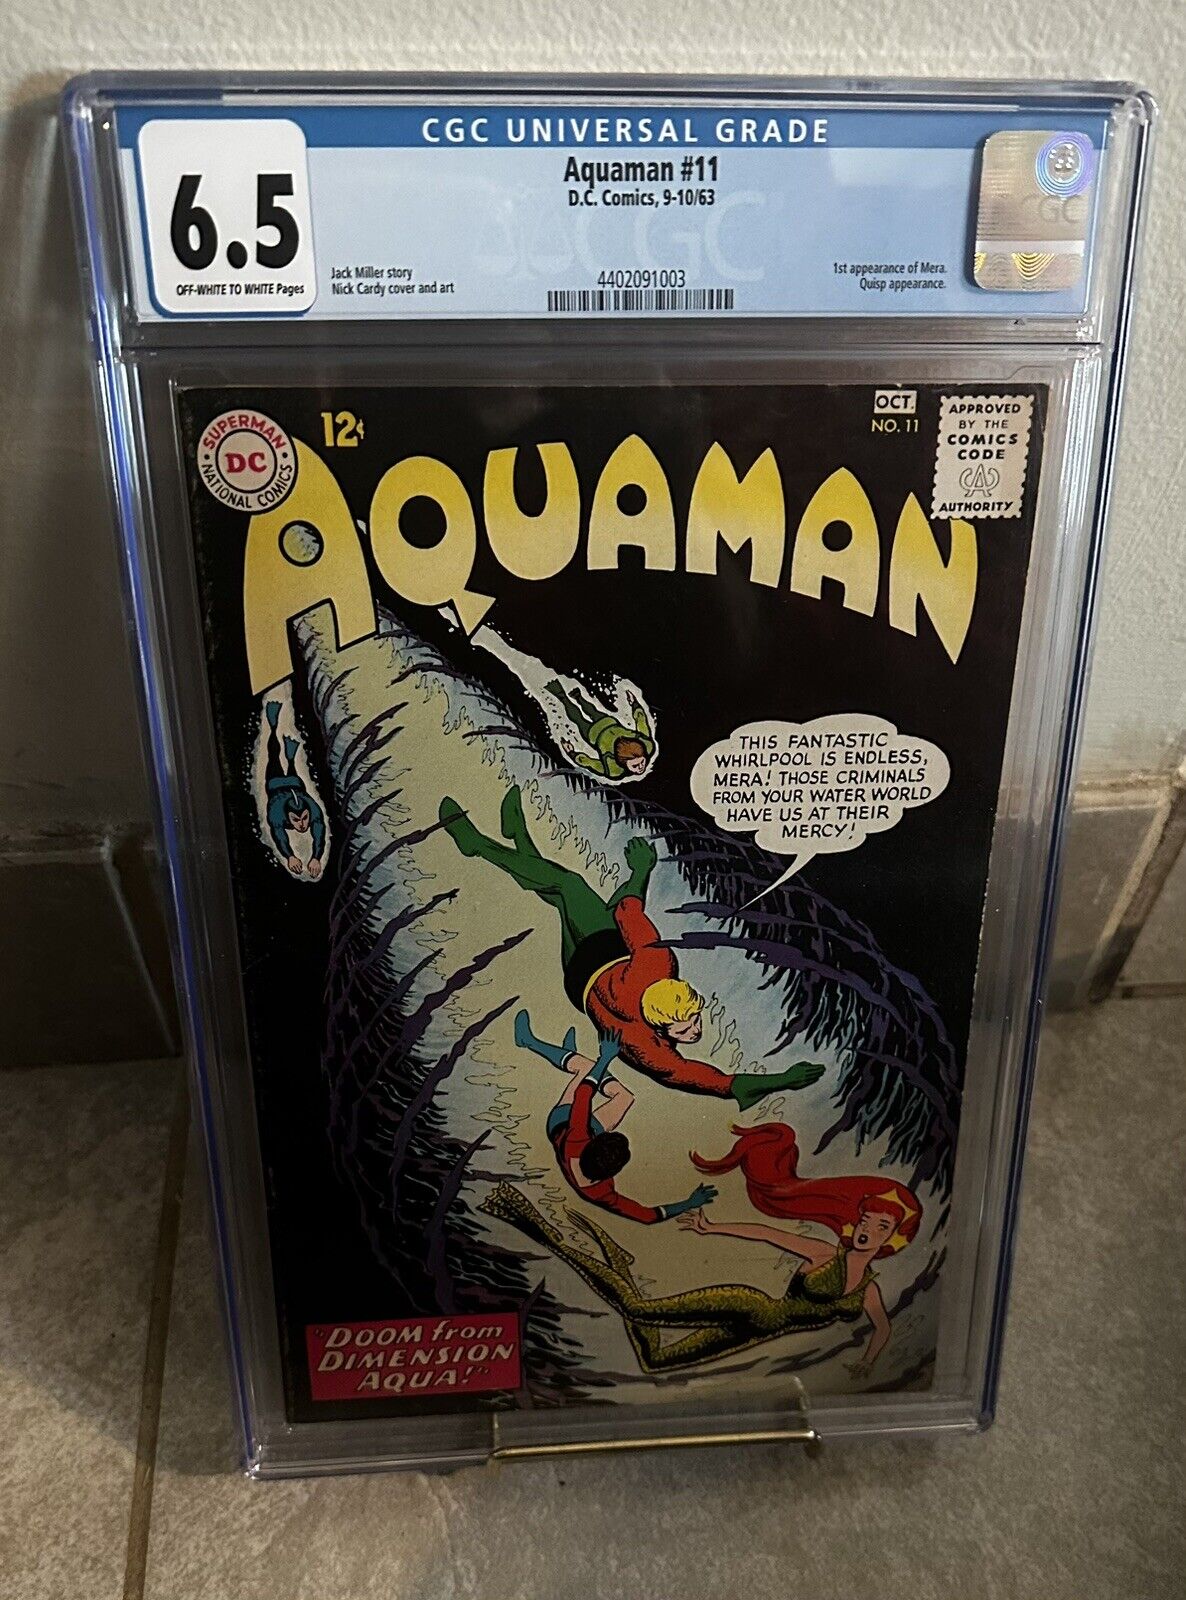 AQUAMAN #11 - DC COMICS (1963) - CGC 6.5 - FIRST APPEARANCE MERA